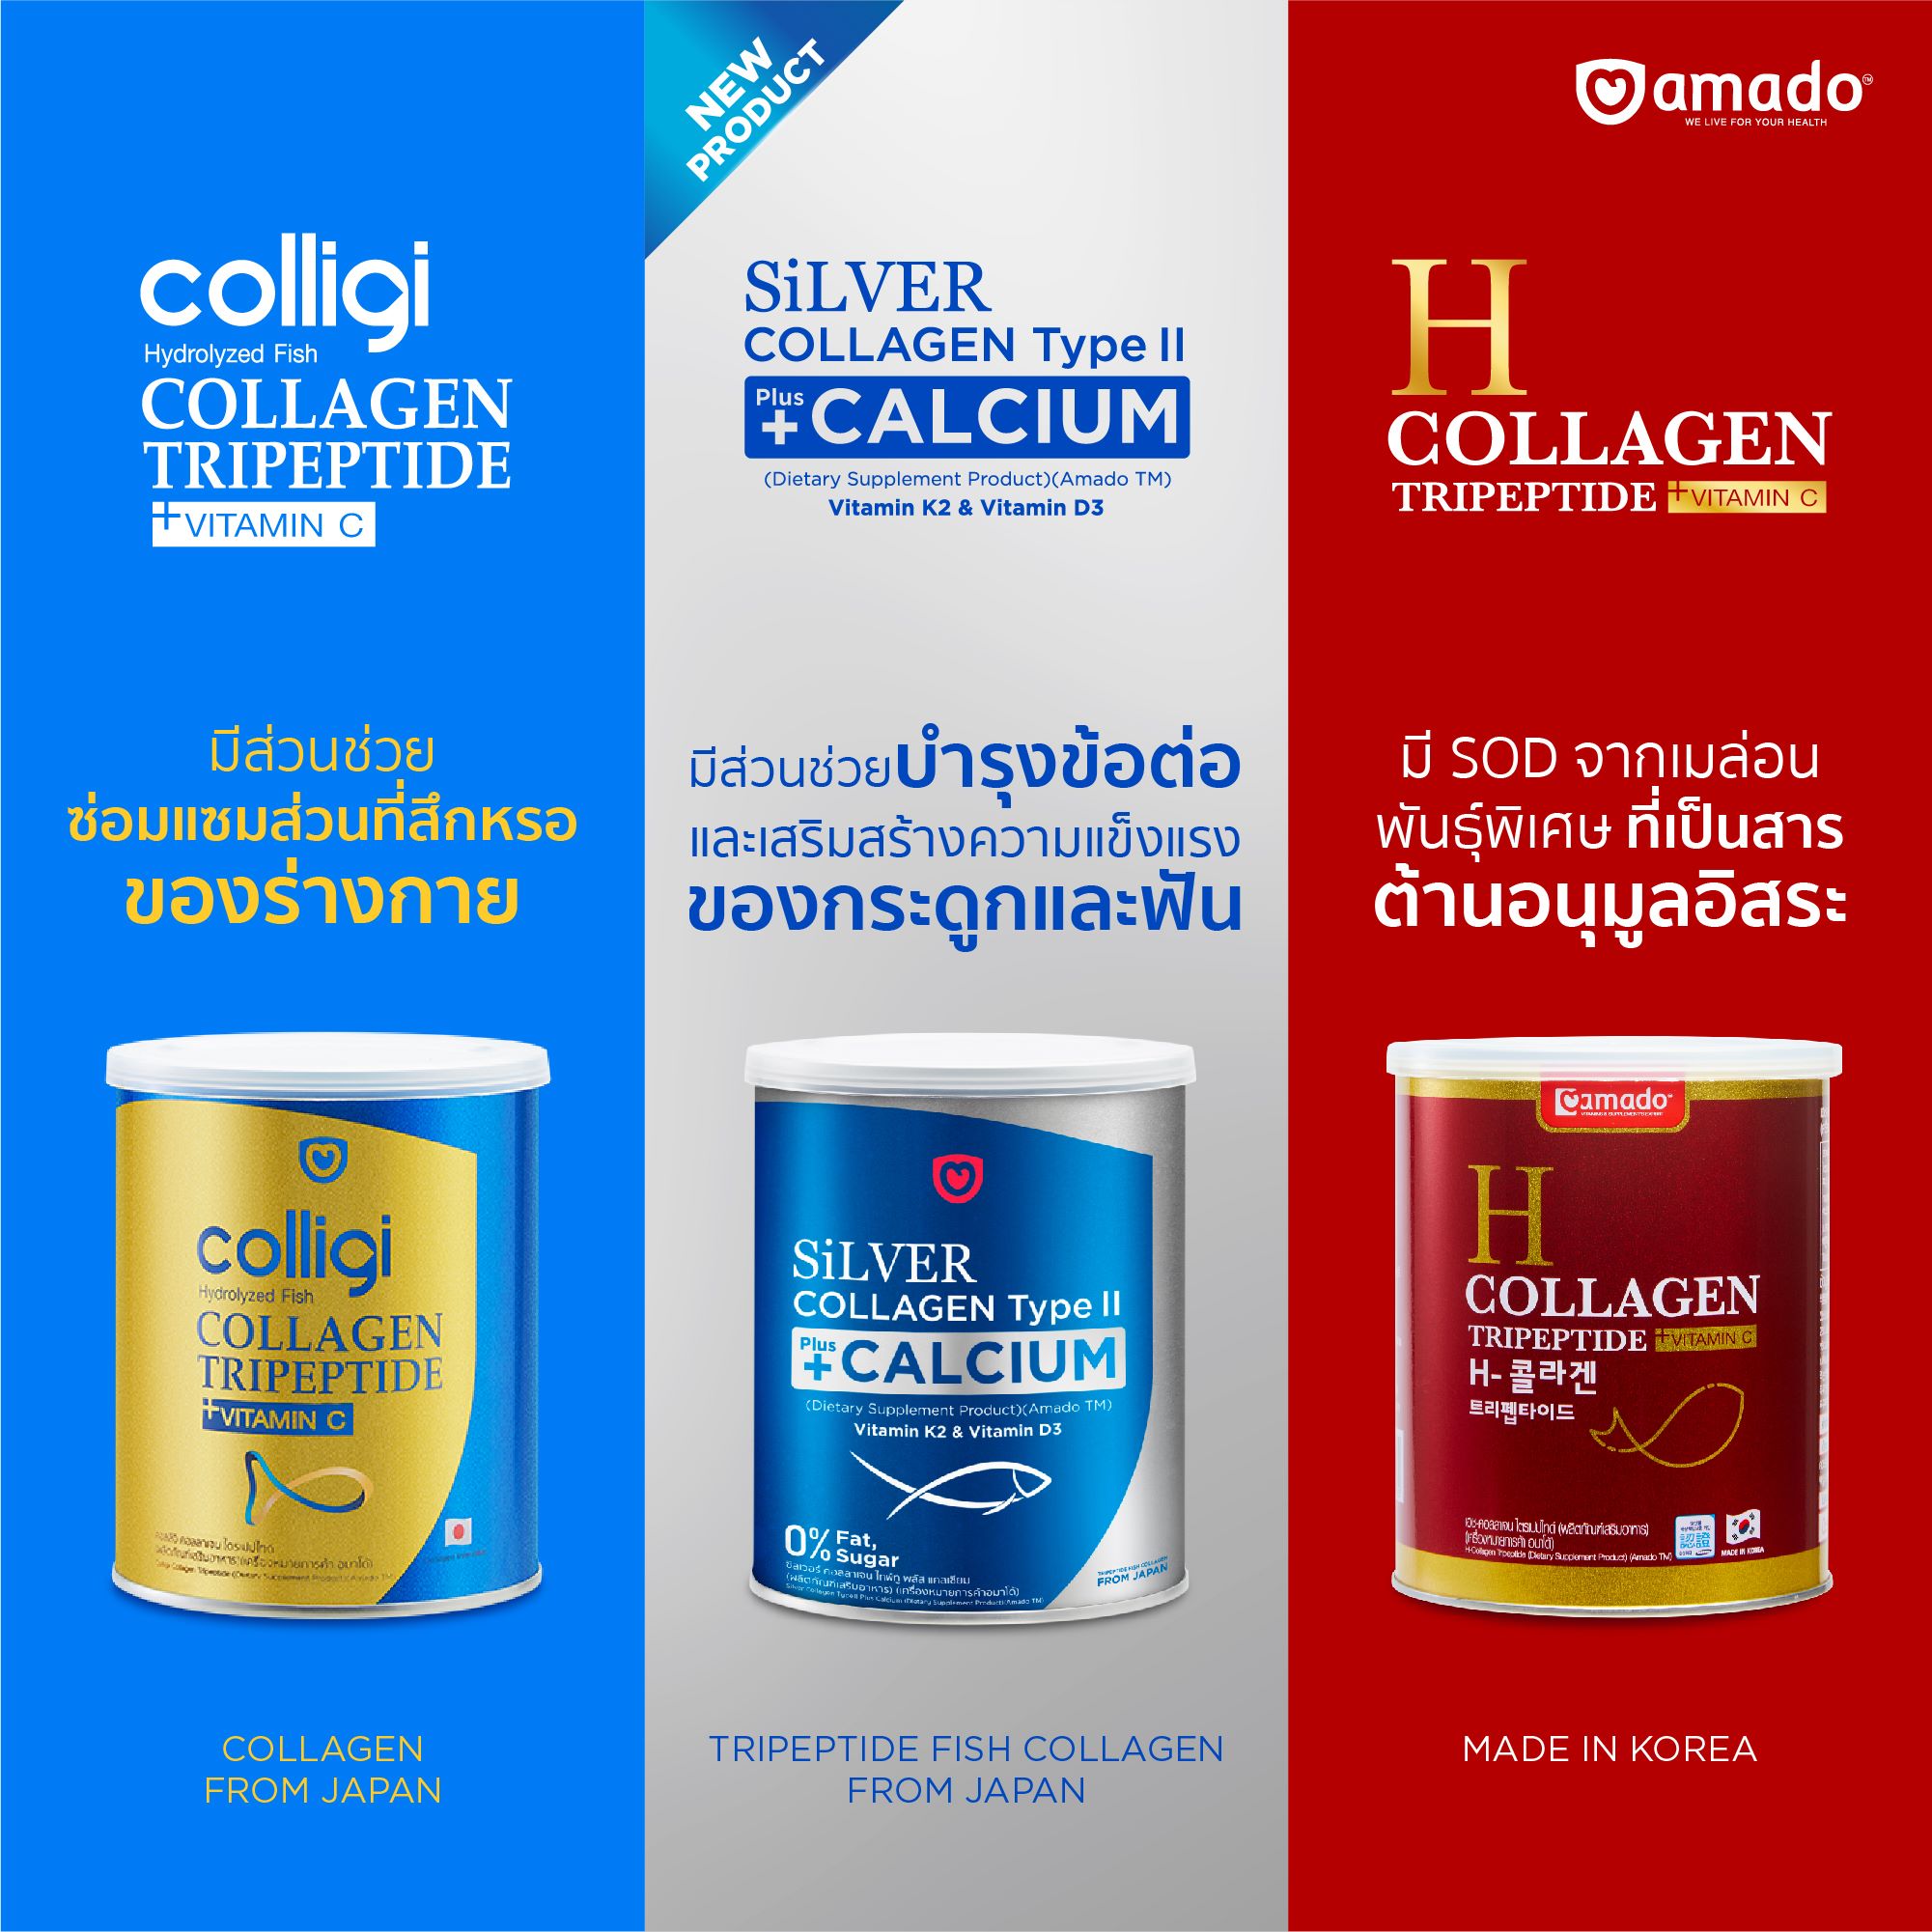 Amado H-Collagen